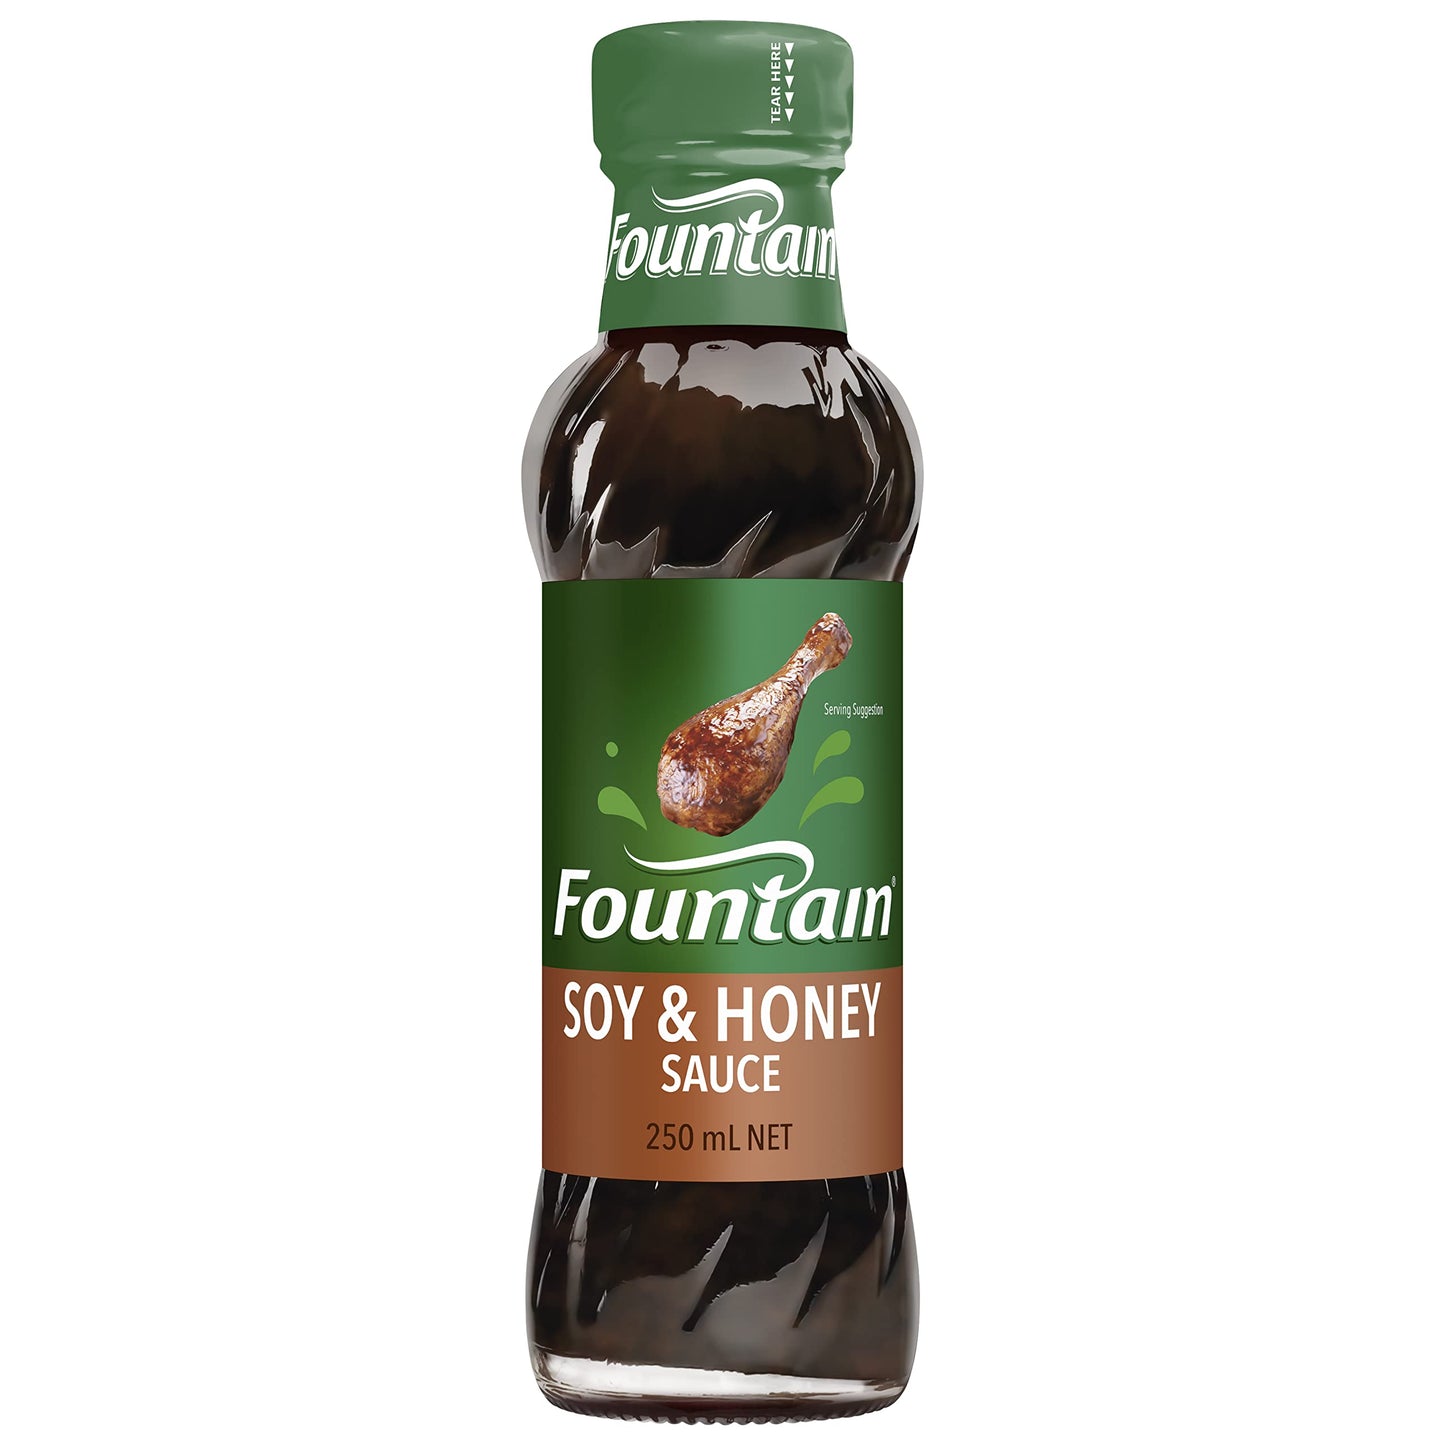 Fountain Soy & Honey Sauce 250ml